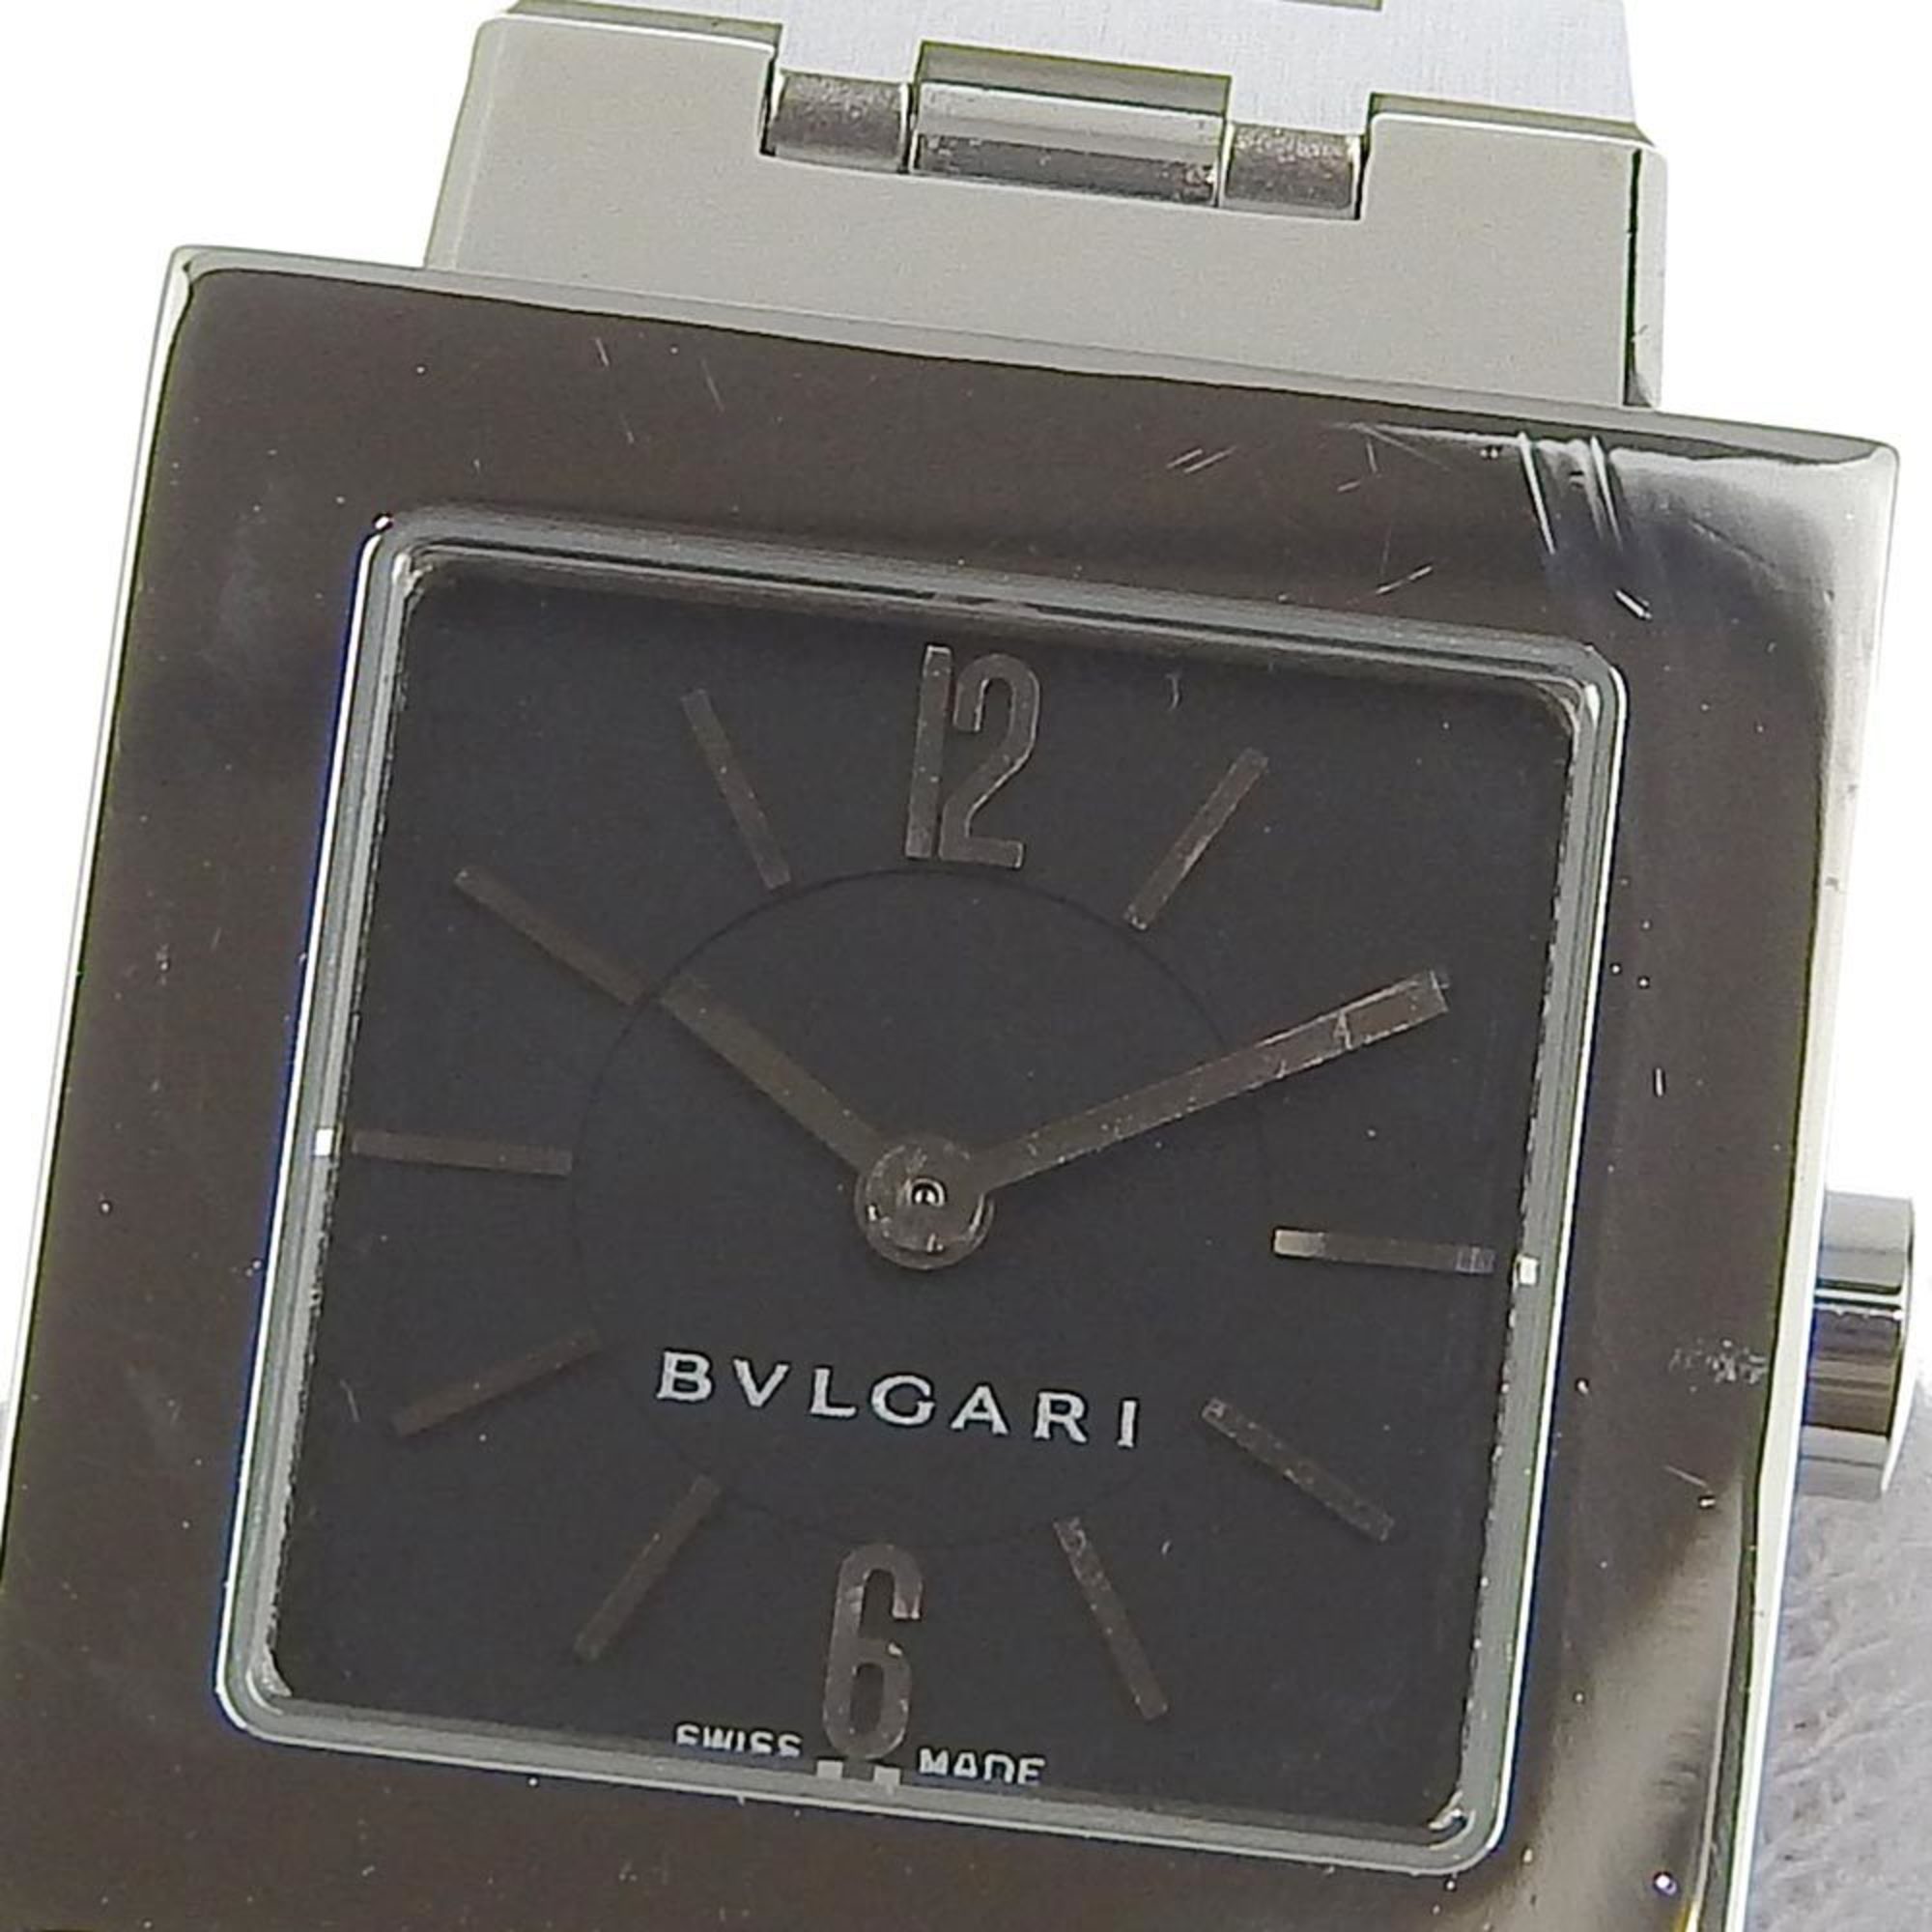 Bulgari BVLGARI Quadlard Watch SQ22SS Stainless Steel Swiss Made Silver Quartz Analog Display Black Dial Ladies